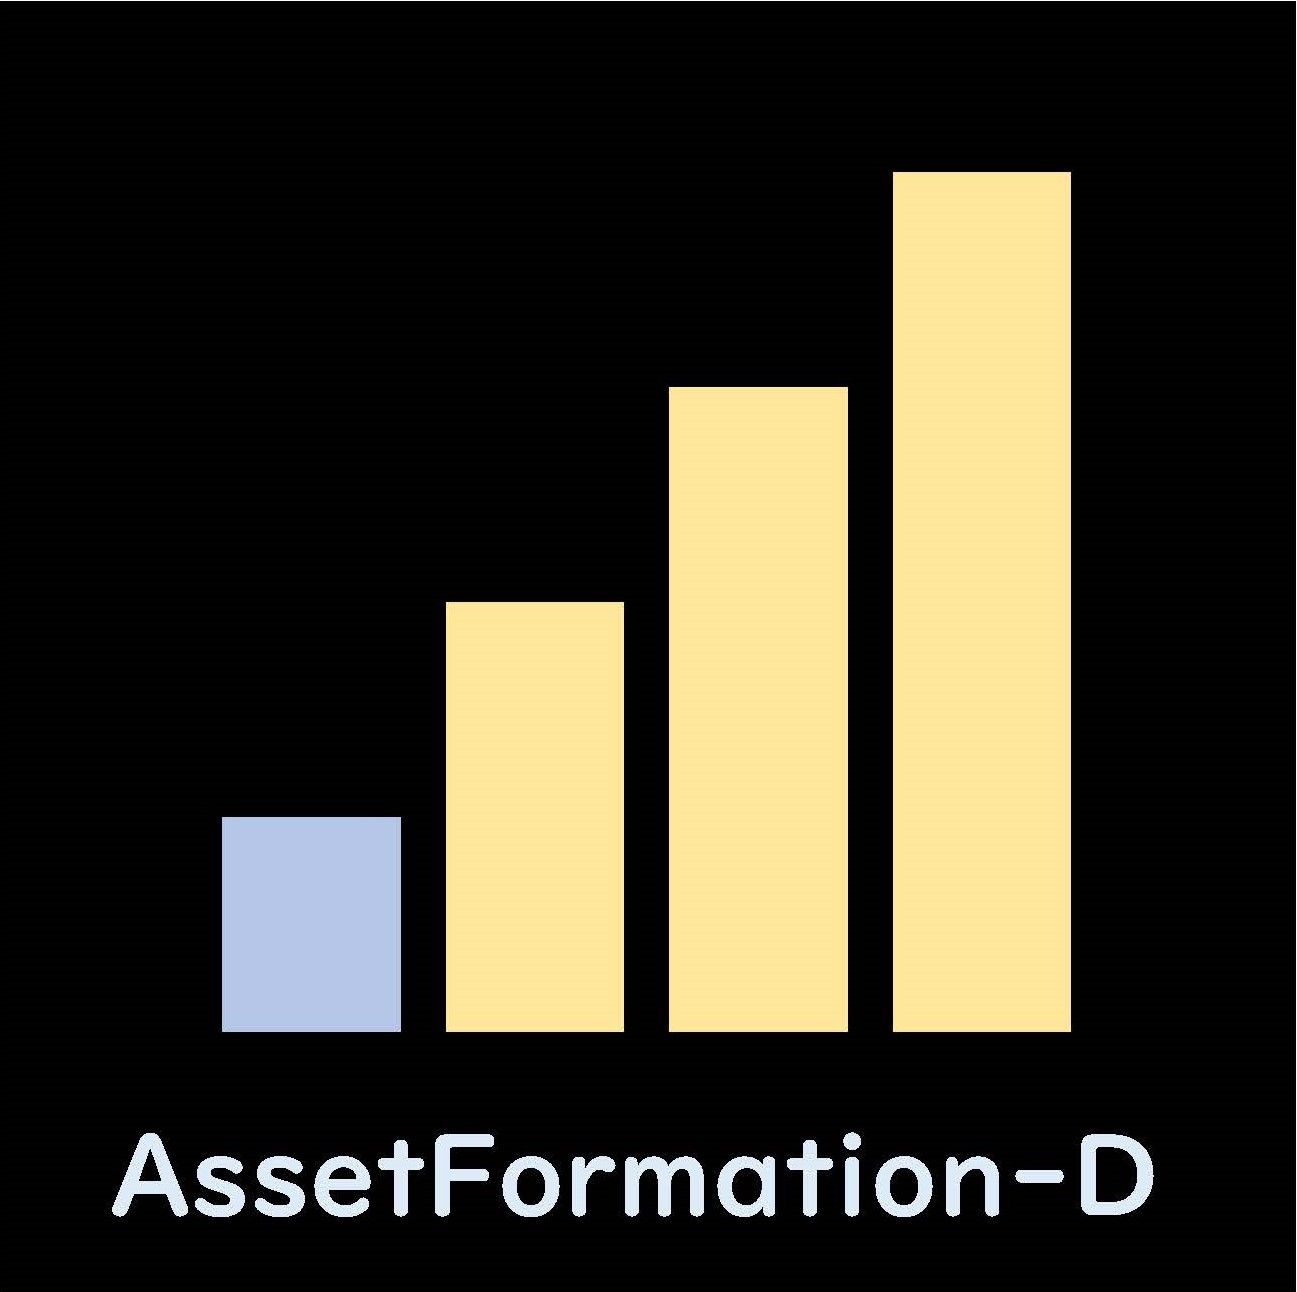 AssetFormation-D Auto Trading